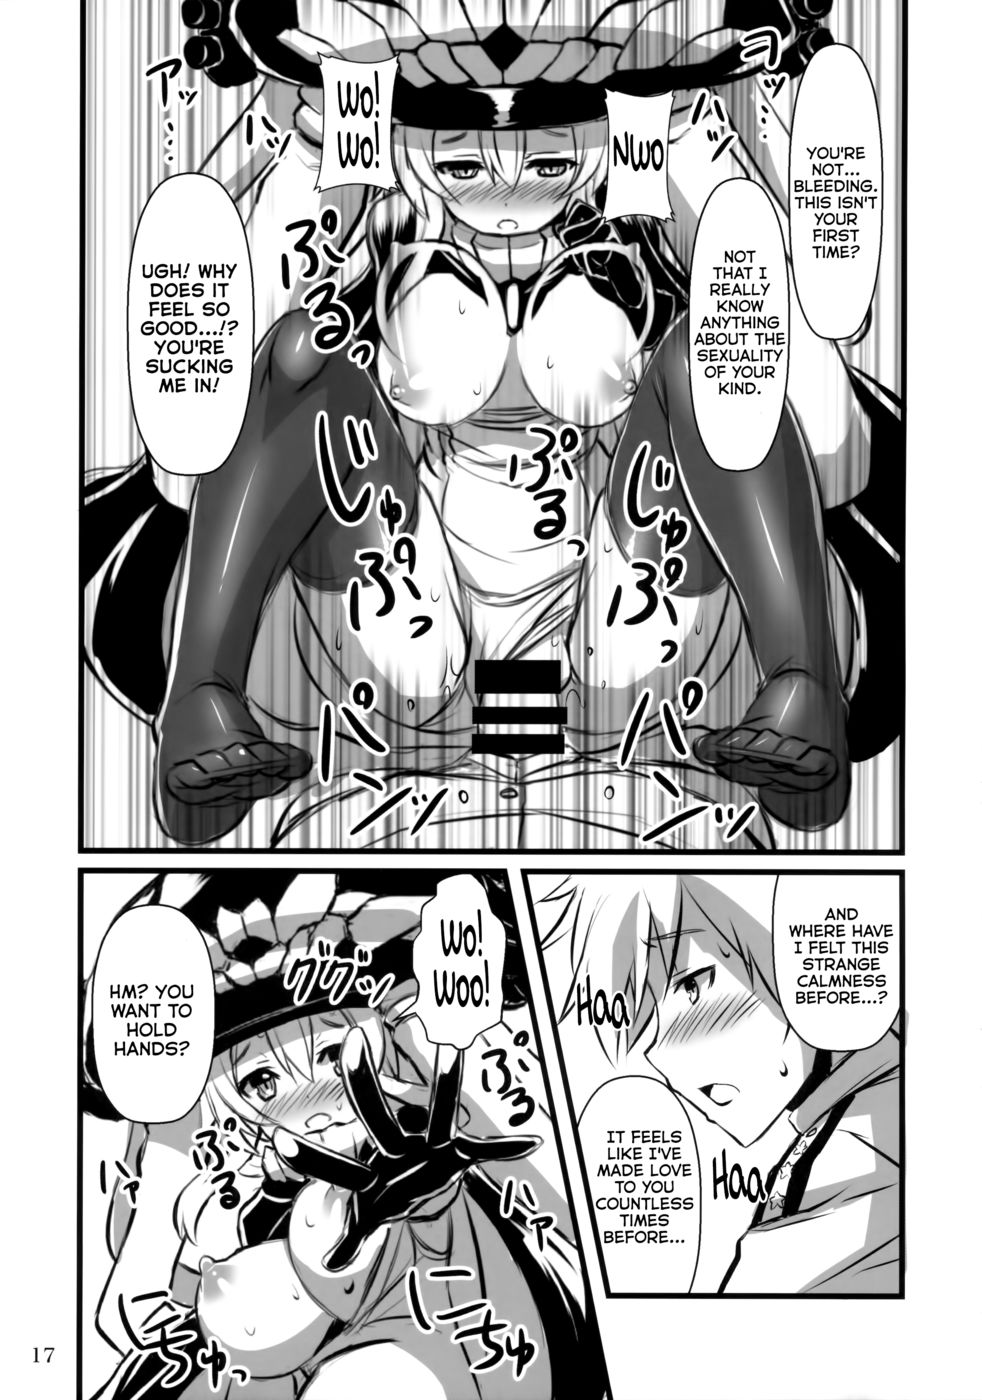 Hentai Manga Comic-Wo-Class-chan Dress Up-Read-16